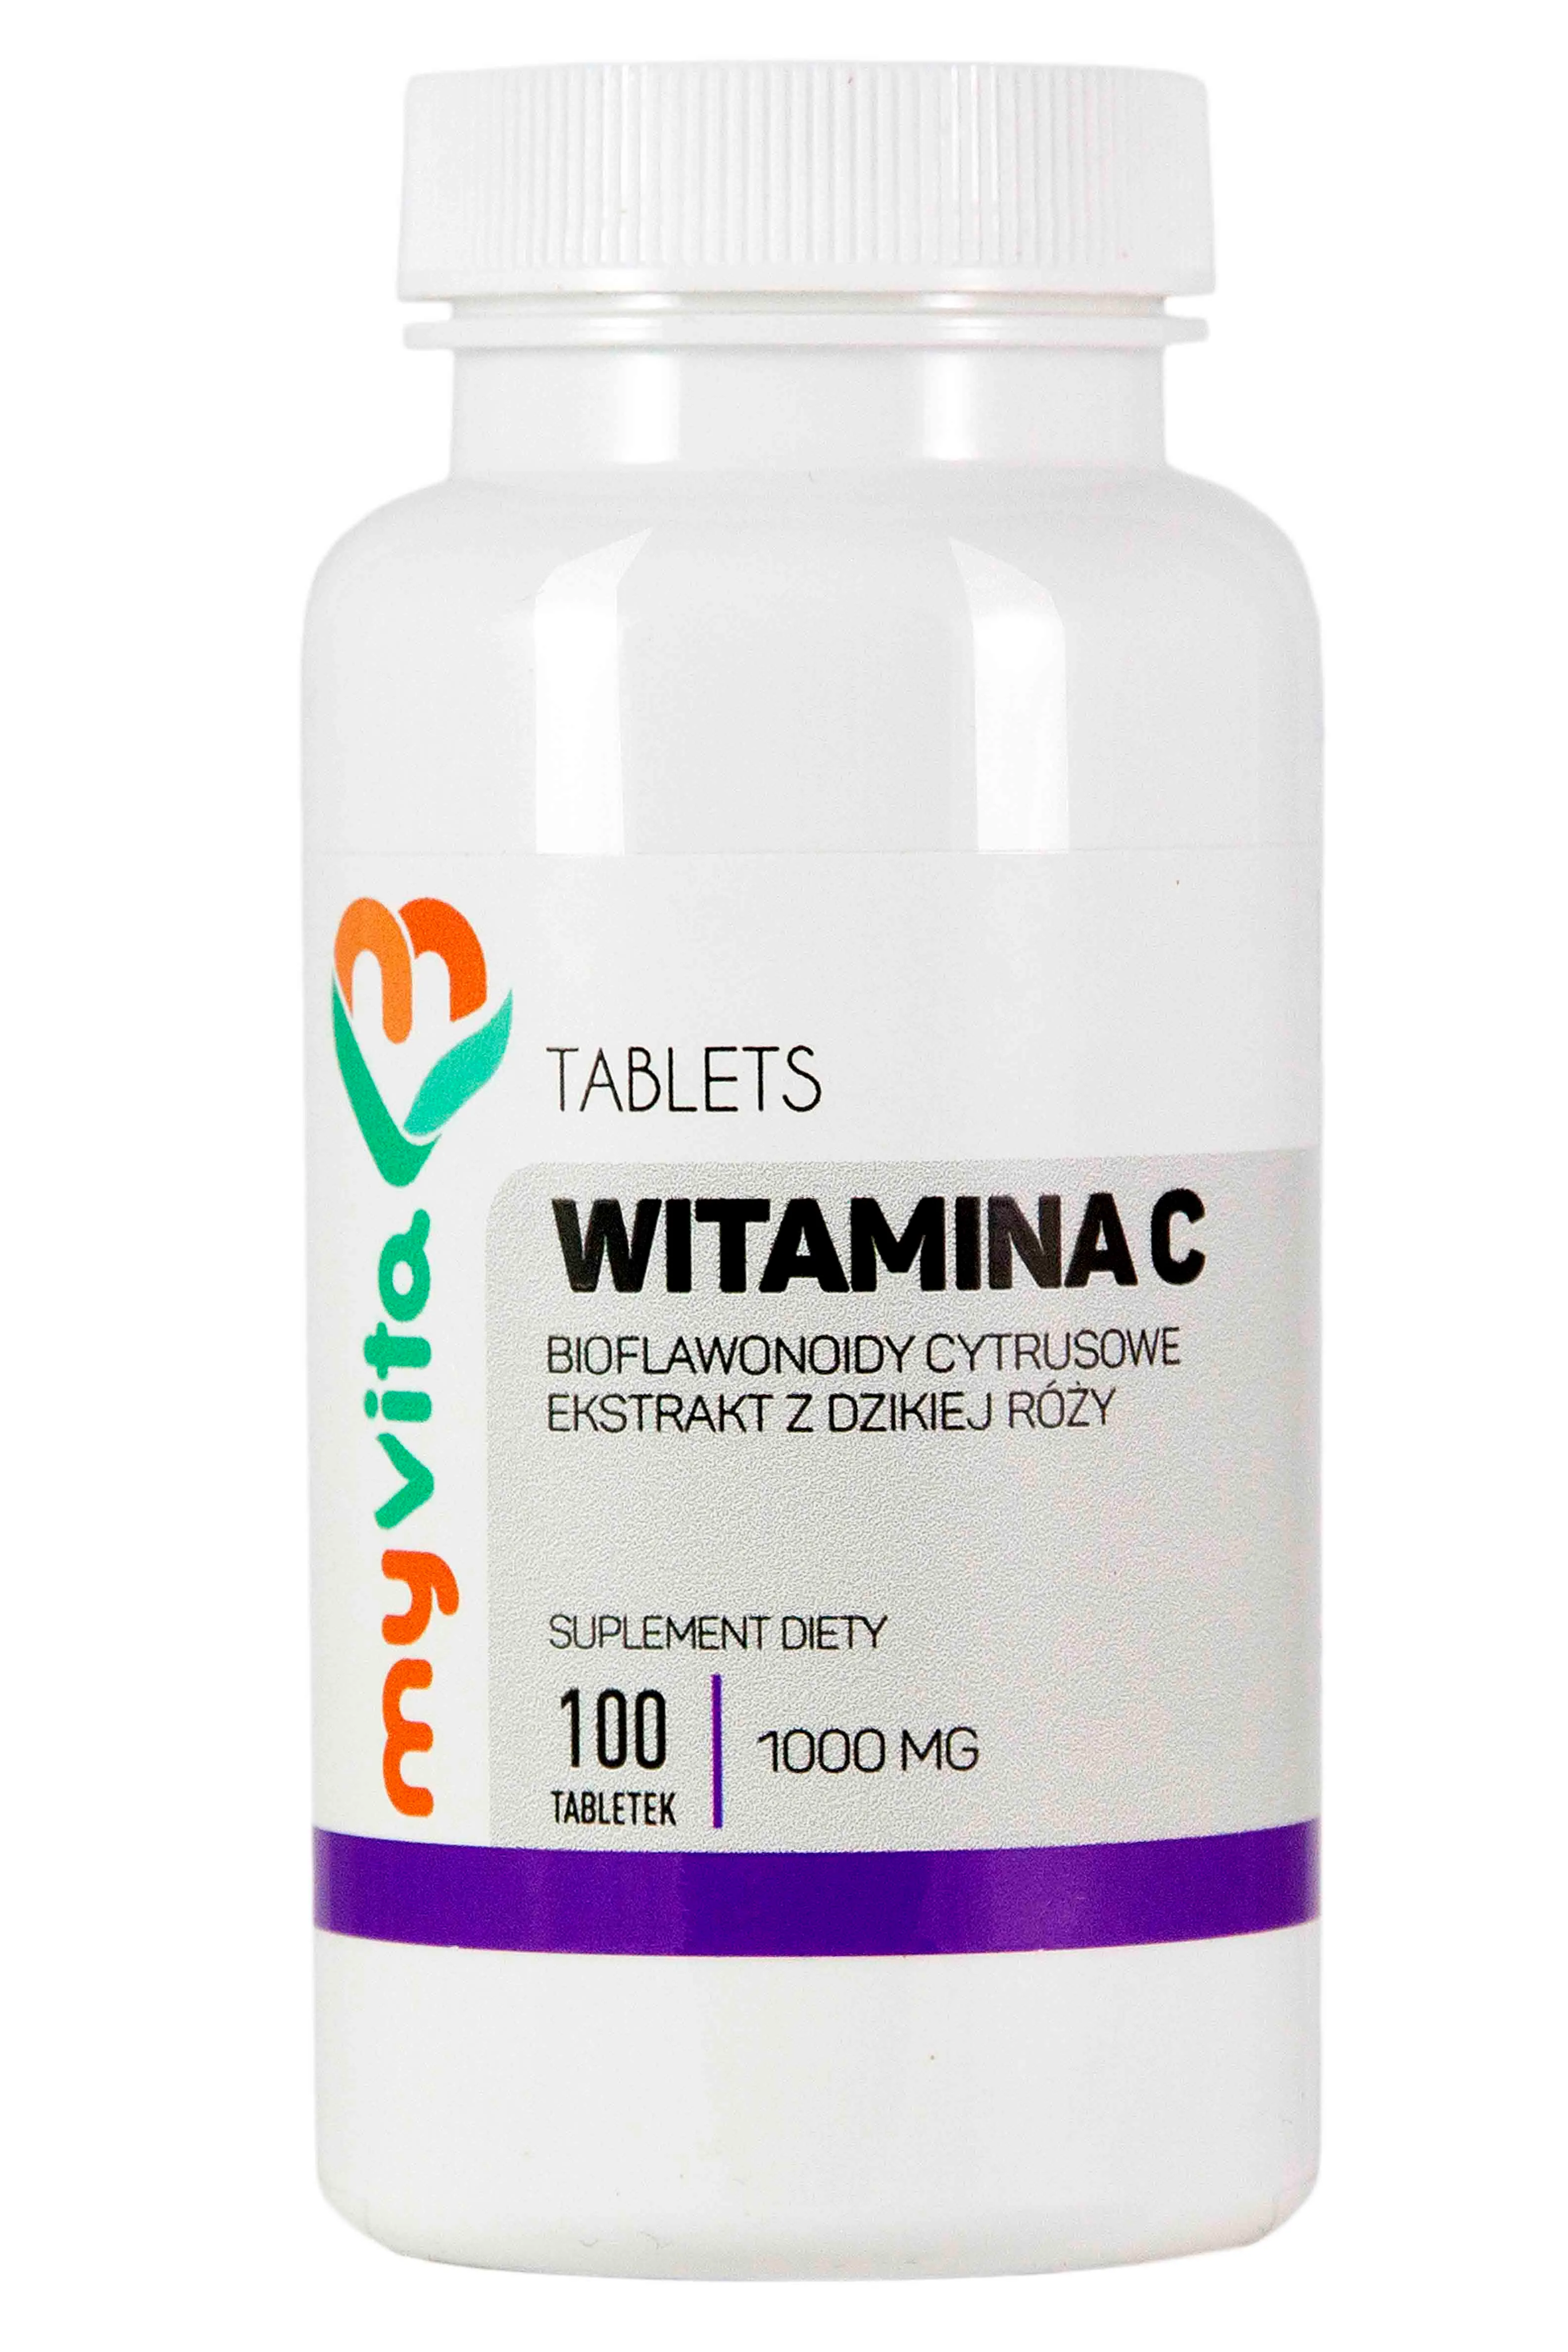 MyVita, Witamina C 1000mg, dzika róża ekstrakt, bioflawonoidy, suplement diety, 100 tabletek